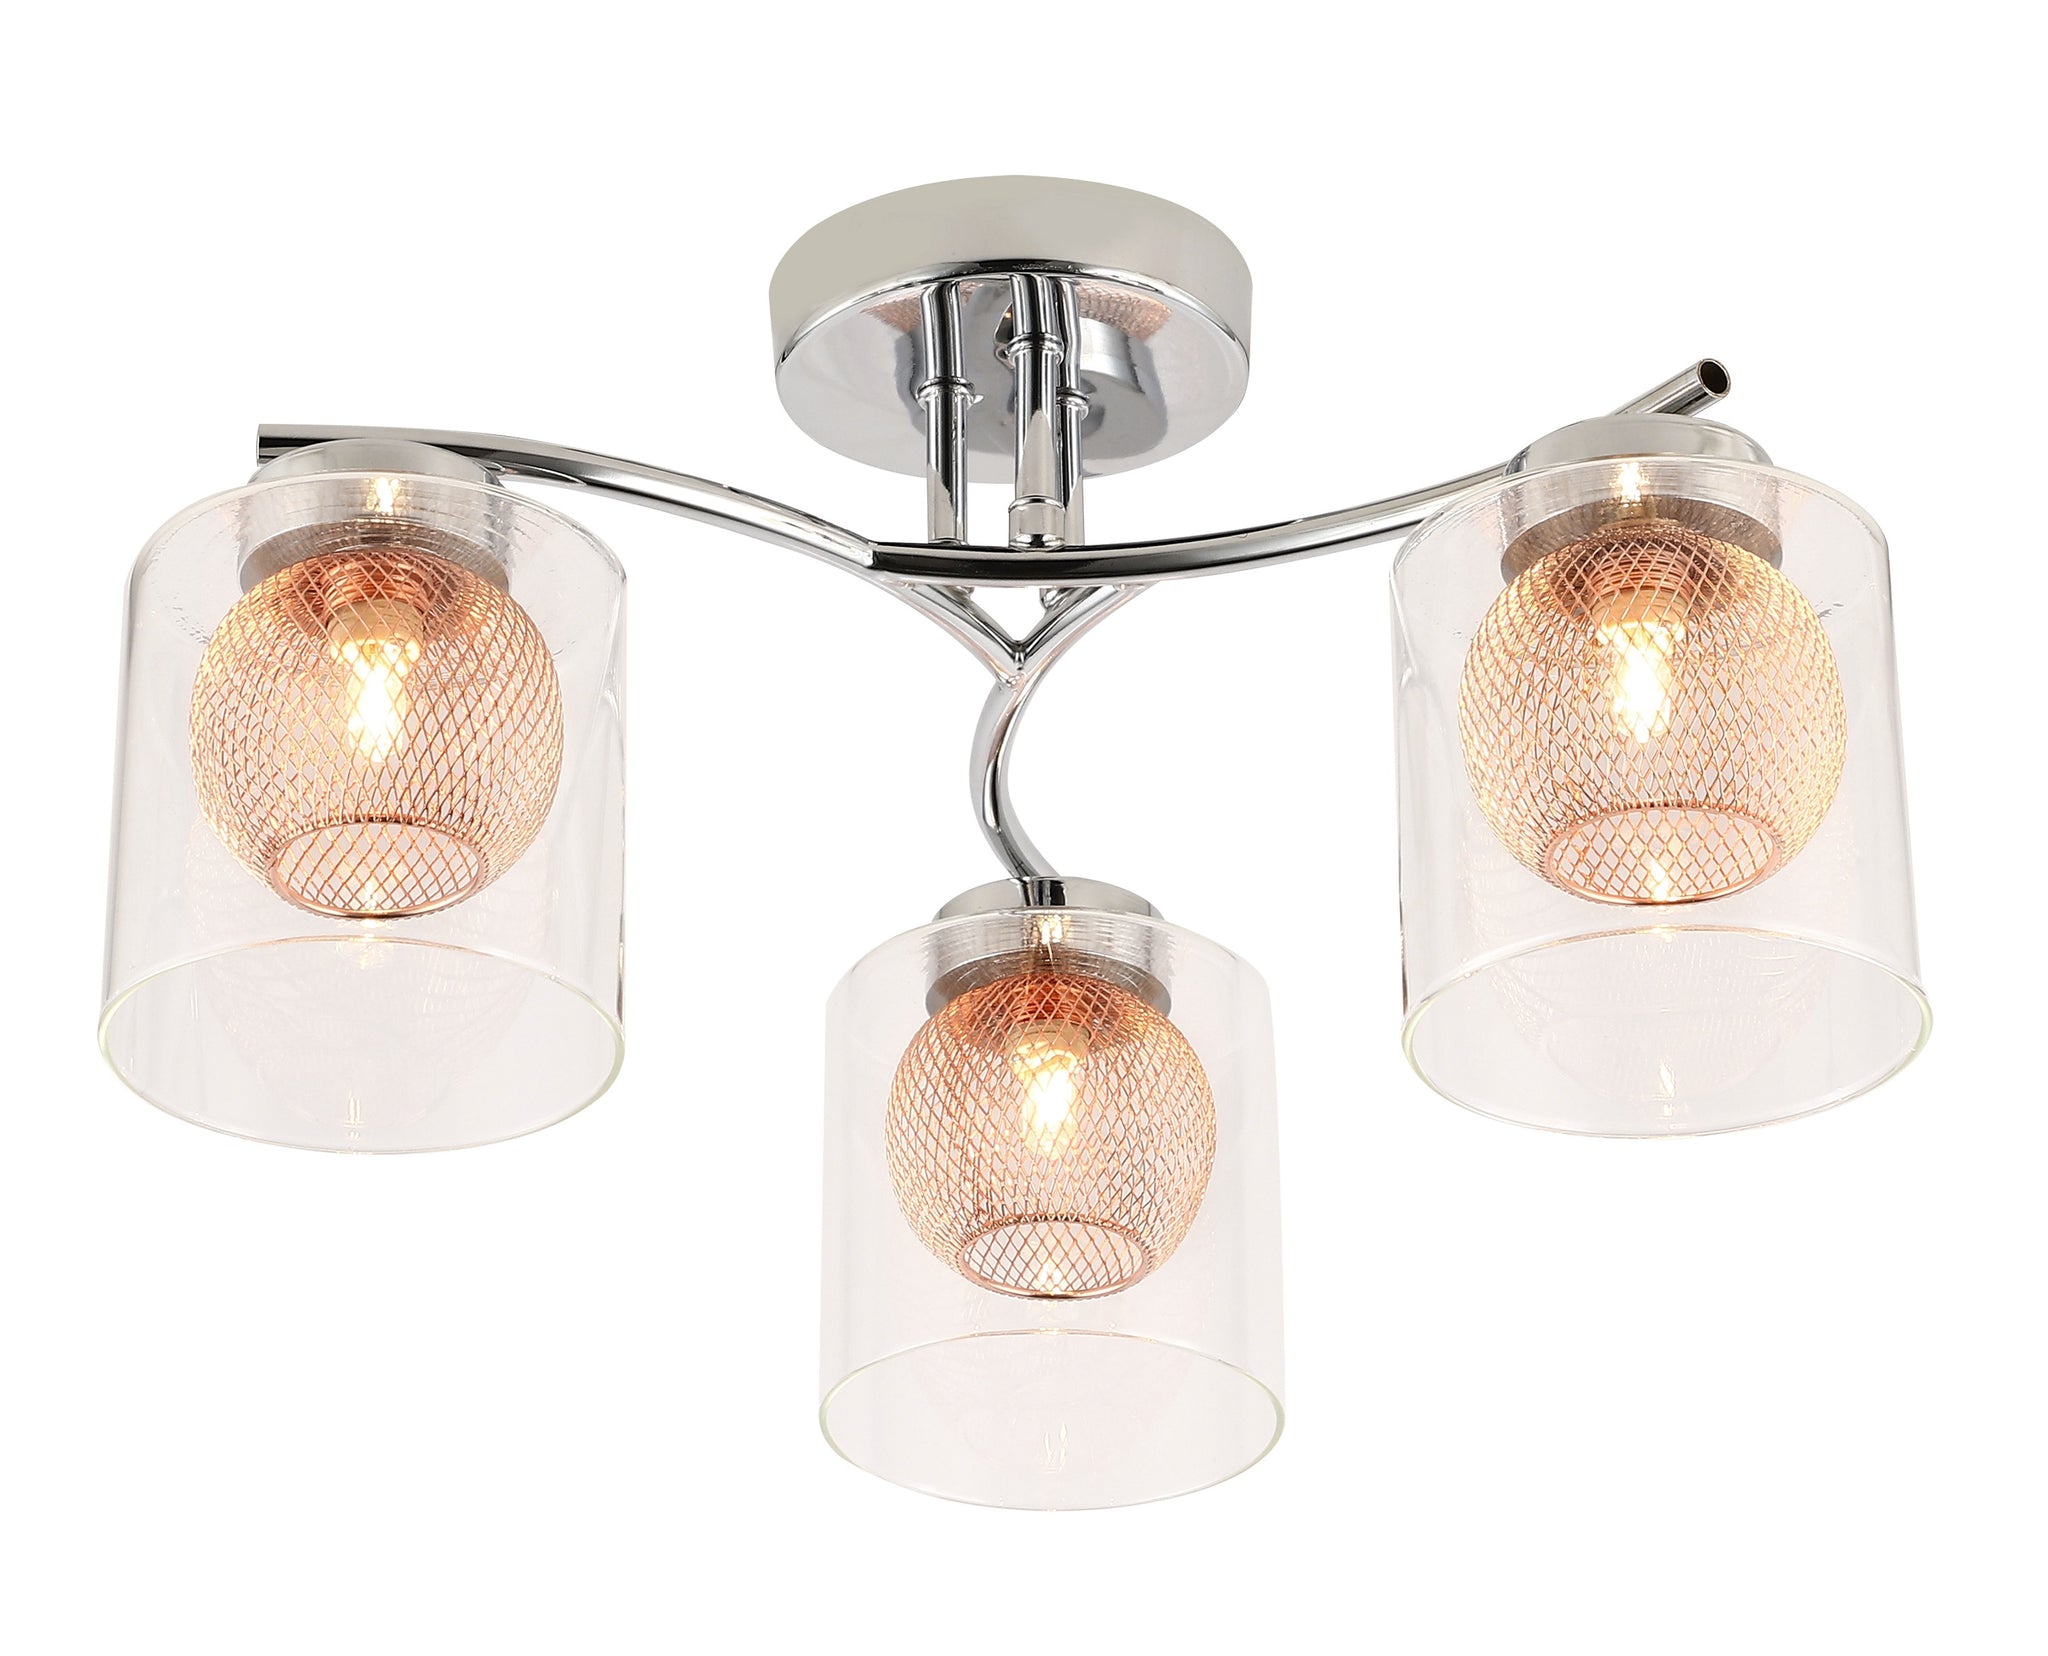 3 Light Semi-Flush Ceiling Light, Cylinder Glass Shades with Inner copper mesh